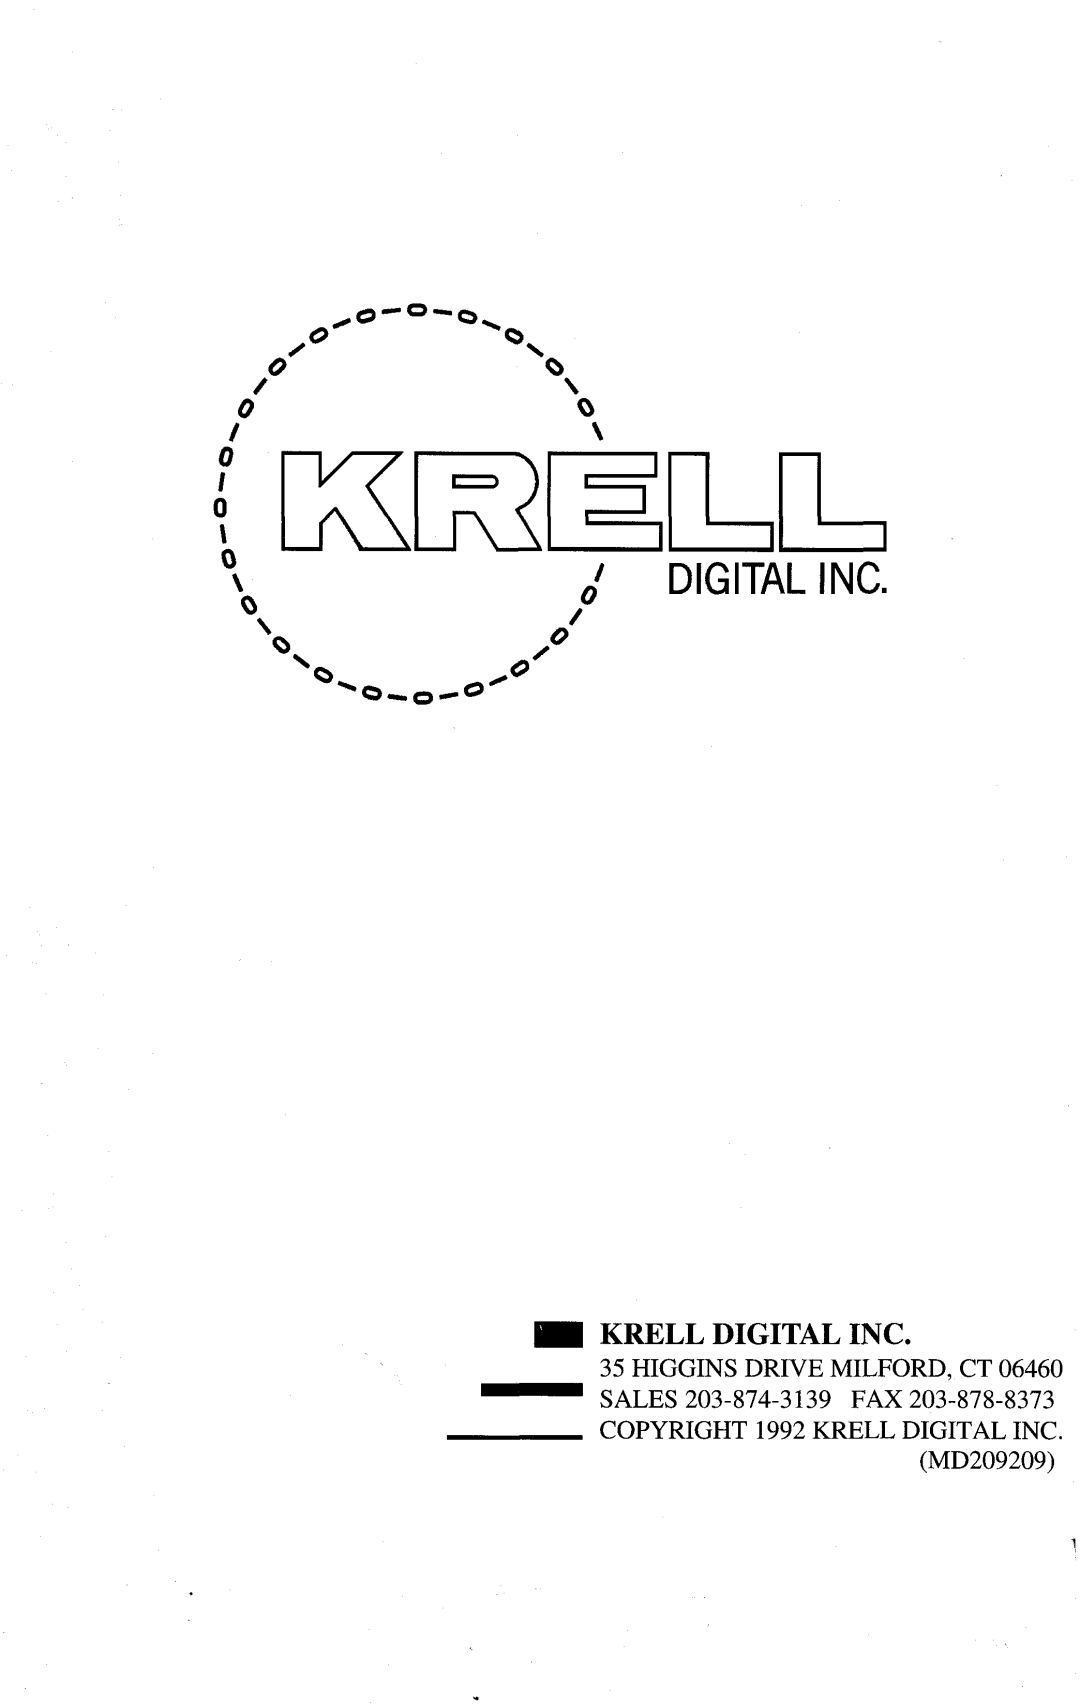 Krell Industries MD-20 manual Krell Digital Inc, COPYRIGHT1992 KRELLDIGITAL INC MD209209 